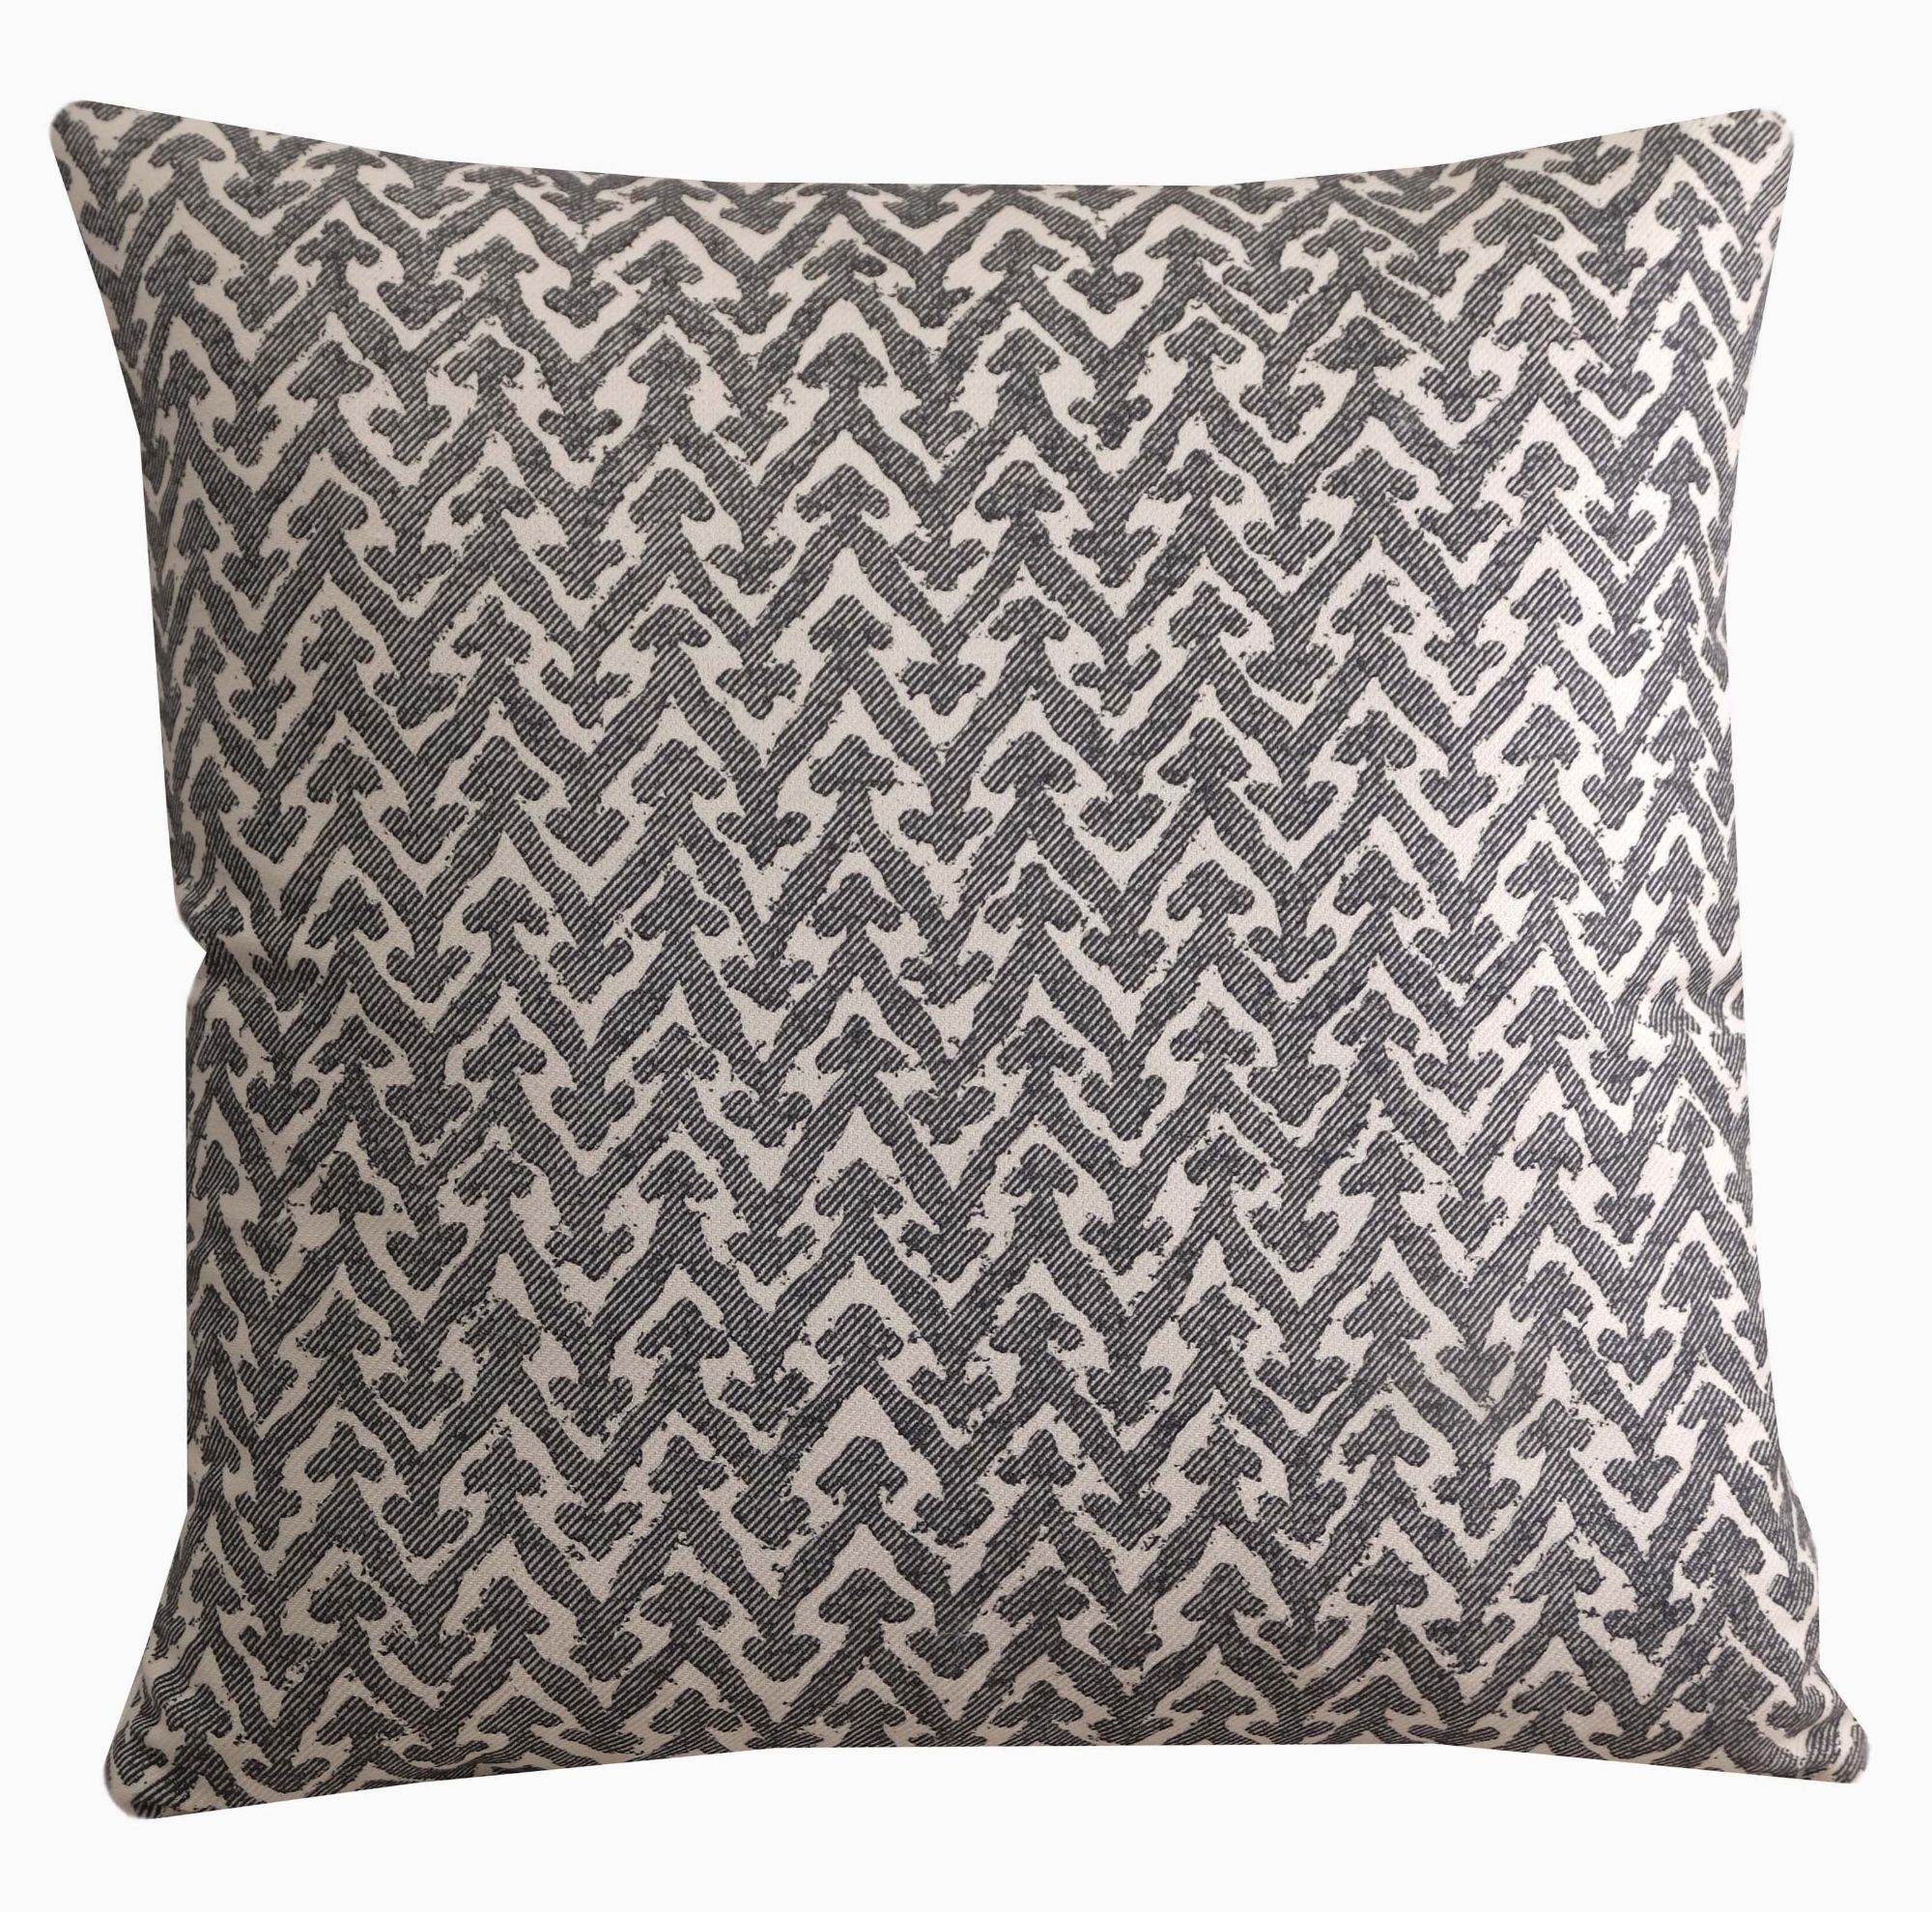 Geometric Cushion Covers